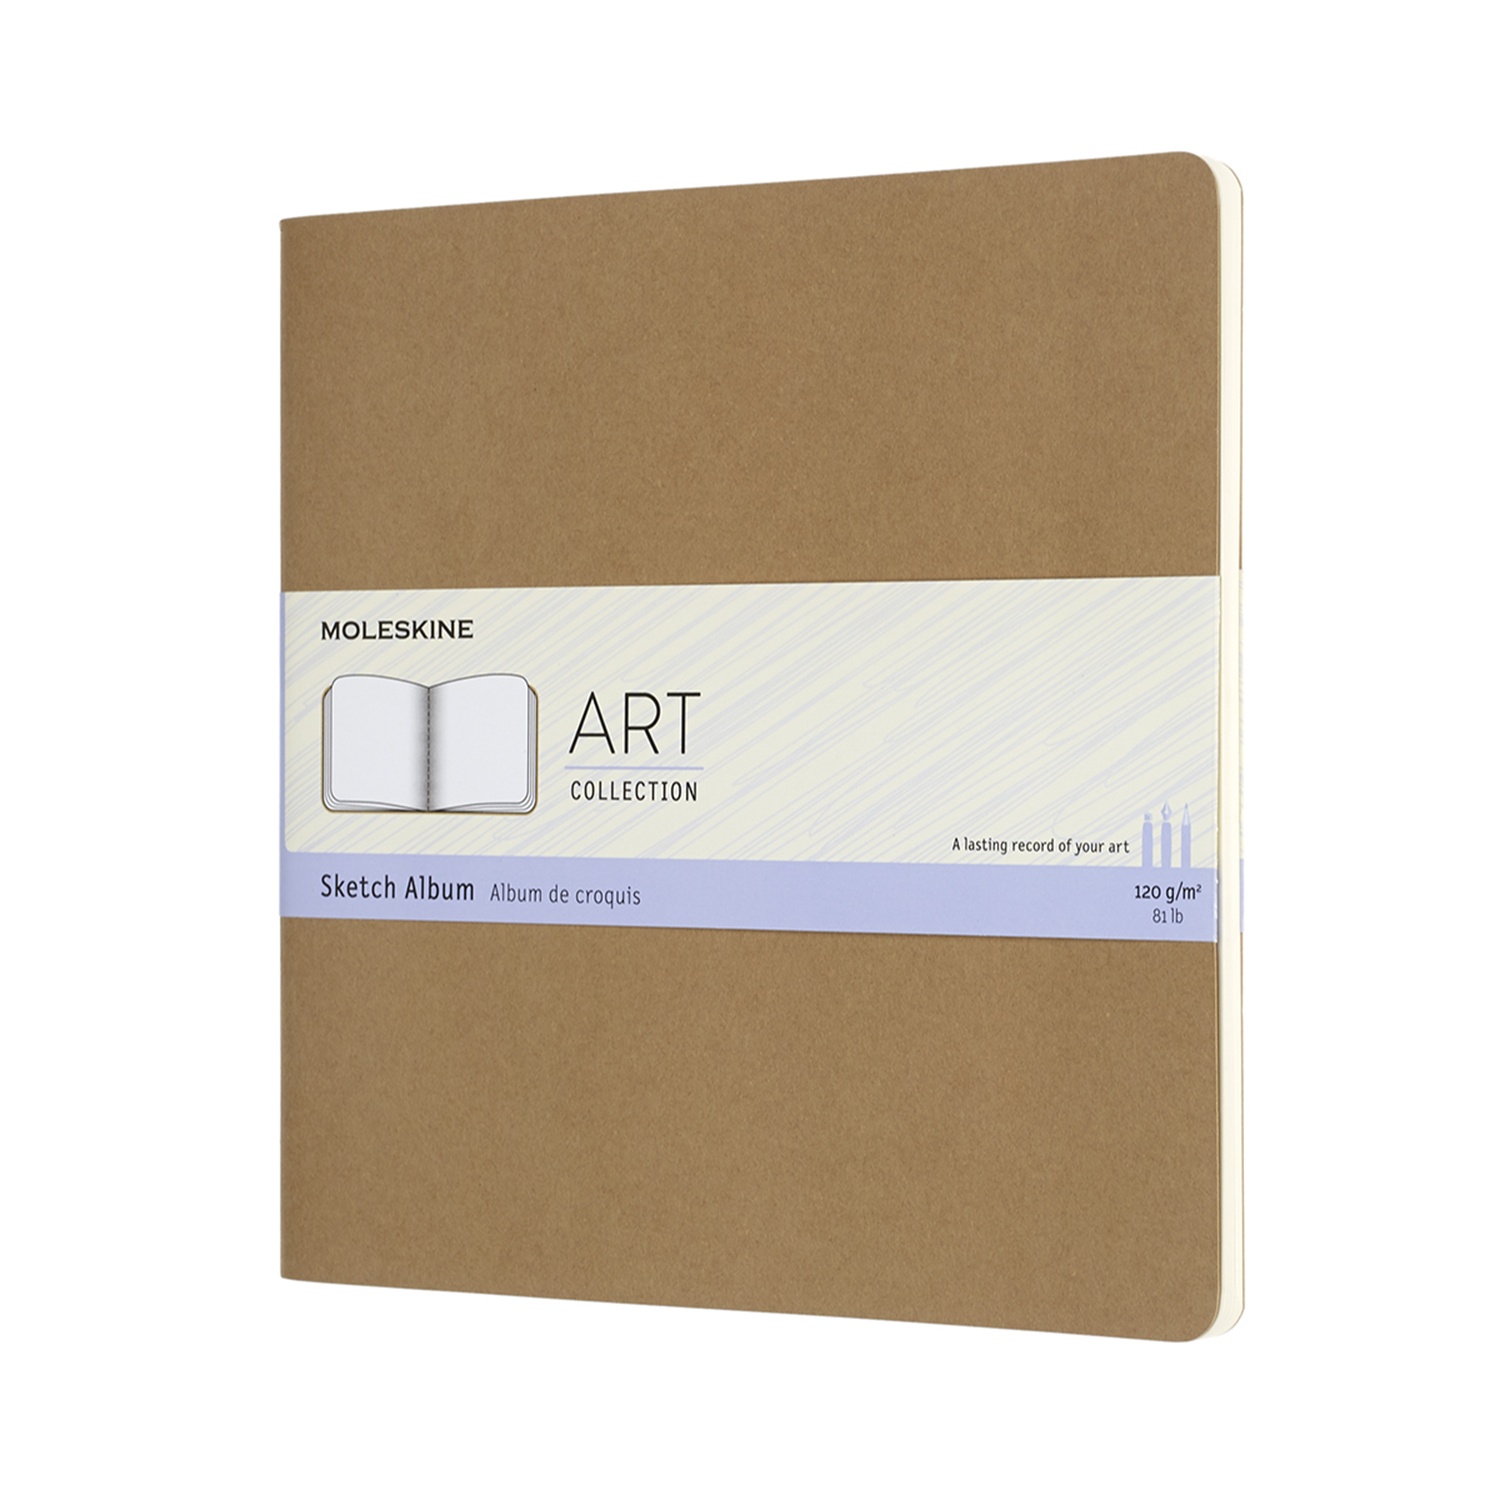 Скетчбук для рисования ART CAHIER SKETCH 120г/кв.м 190х190мм 44л. бежевый по 2 375.00 руб от Moleskine